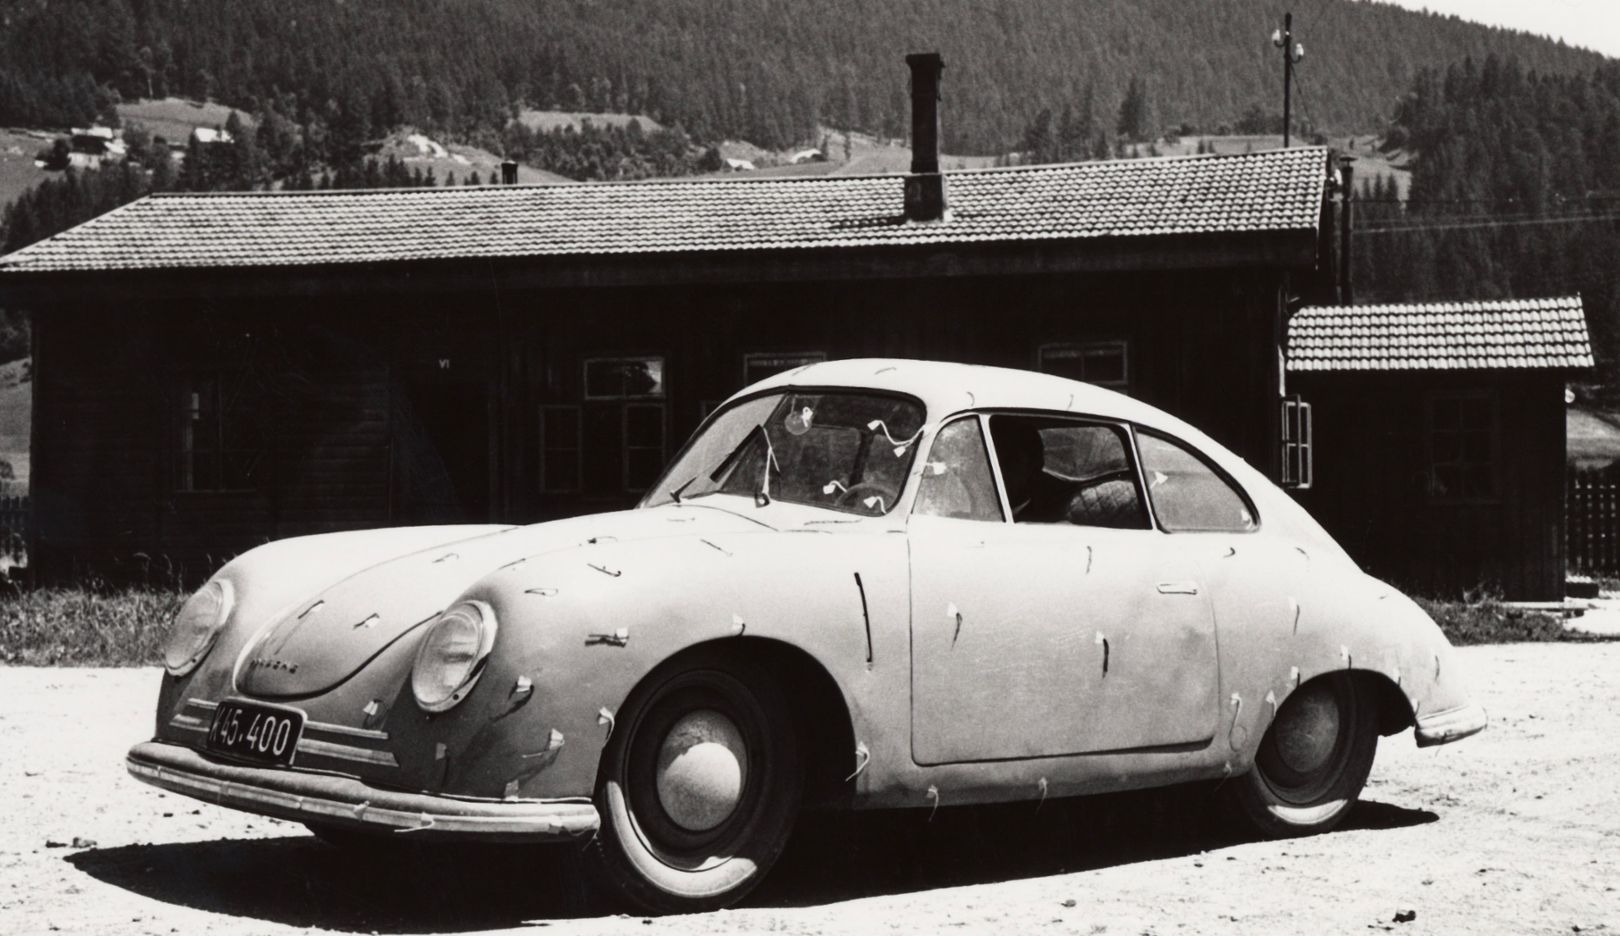 The Gmünd Porsche